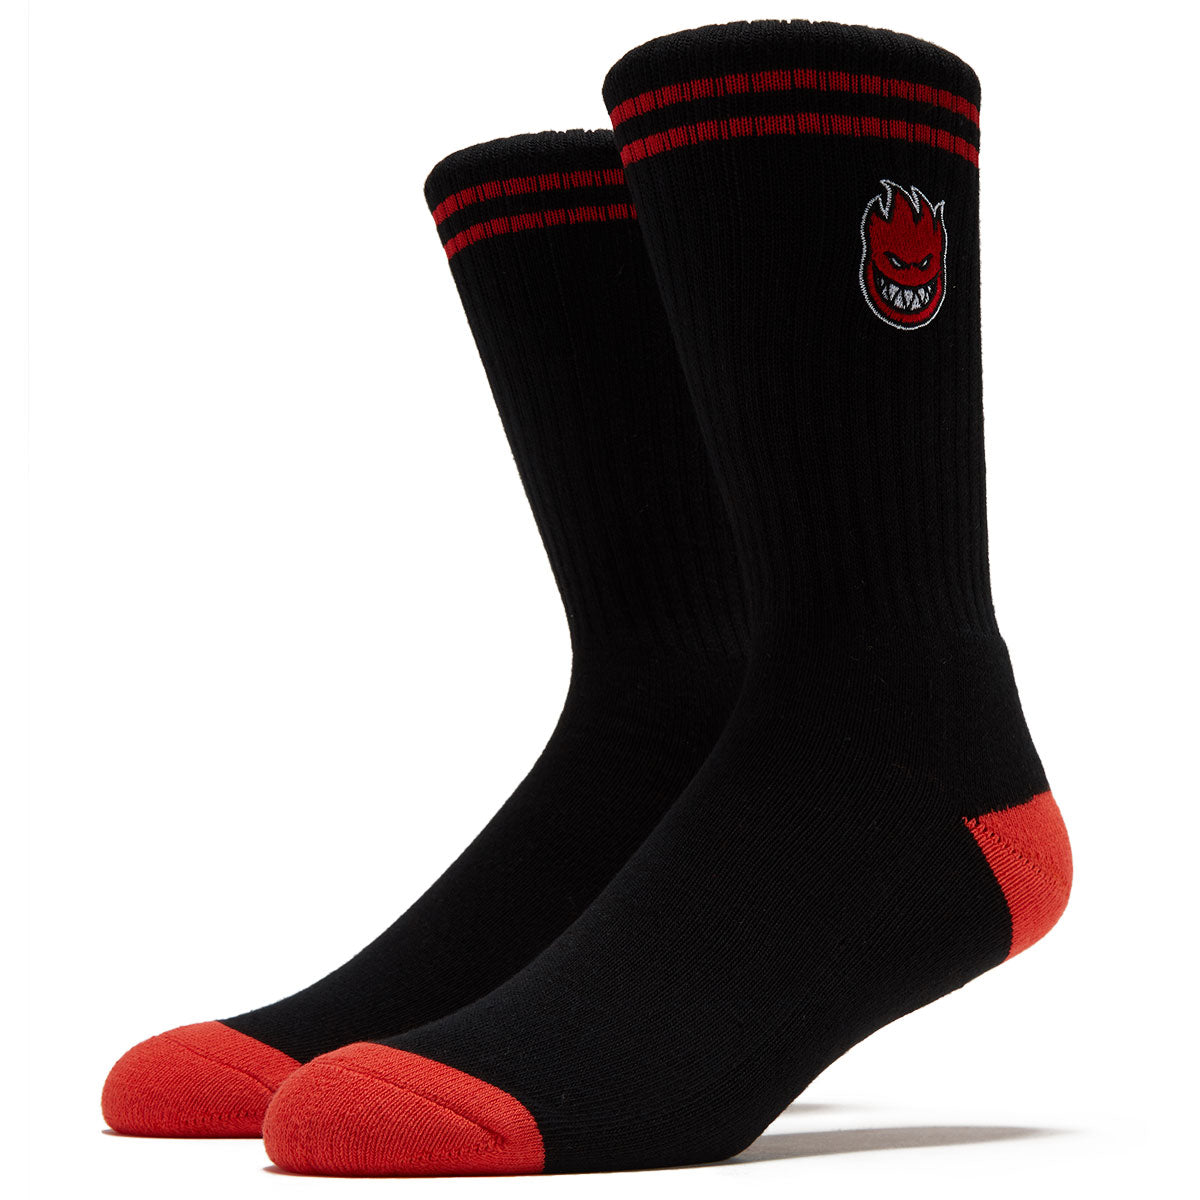 Spitfire Bighead Fill Emb Socks - Black/Red image 1